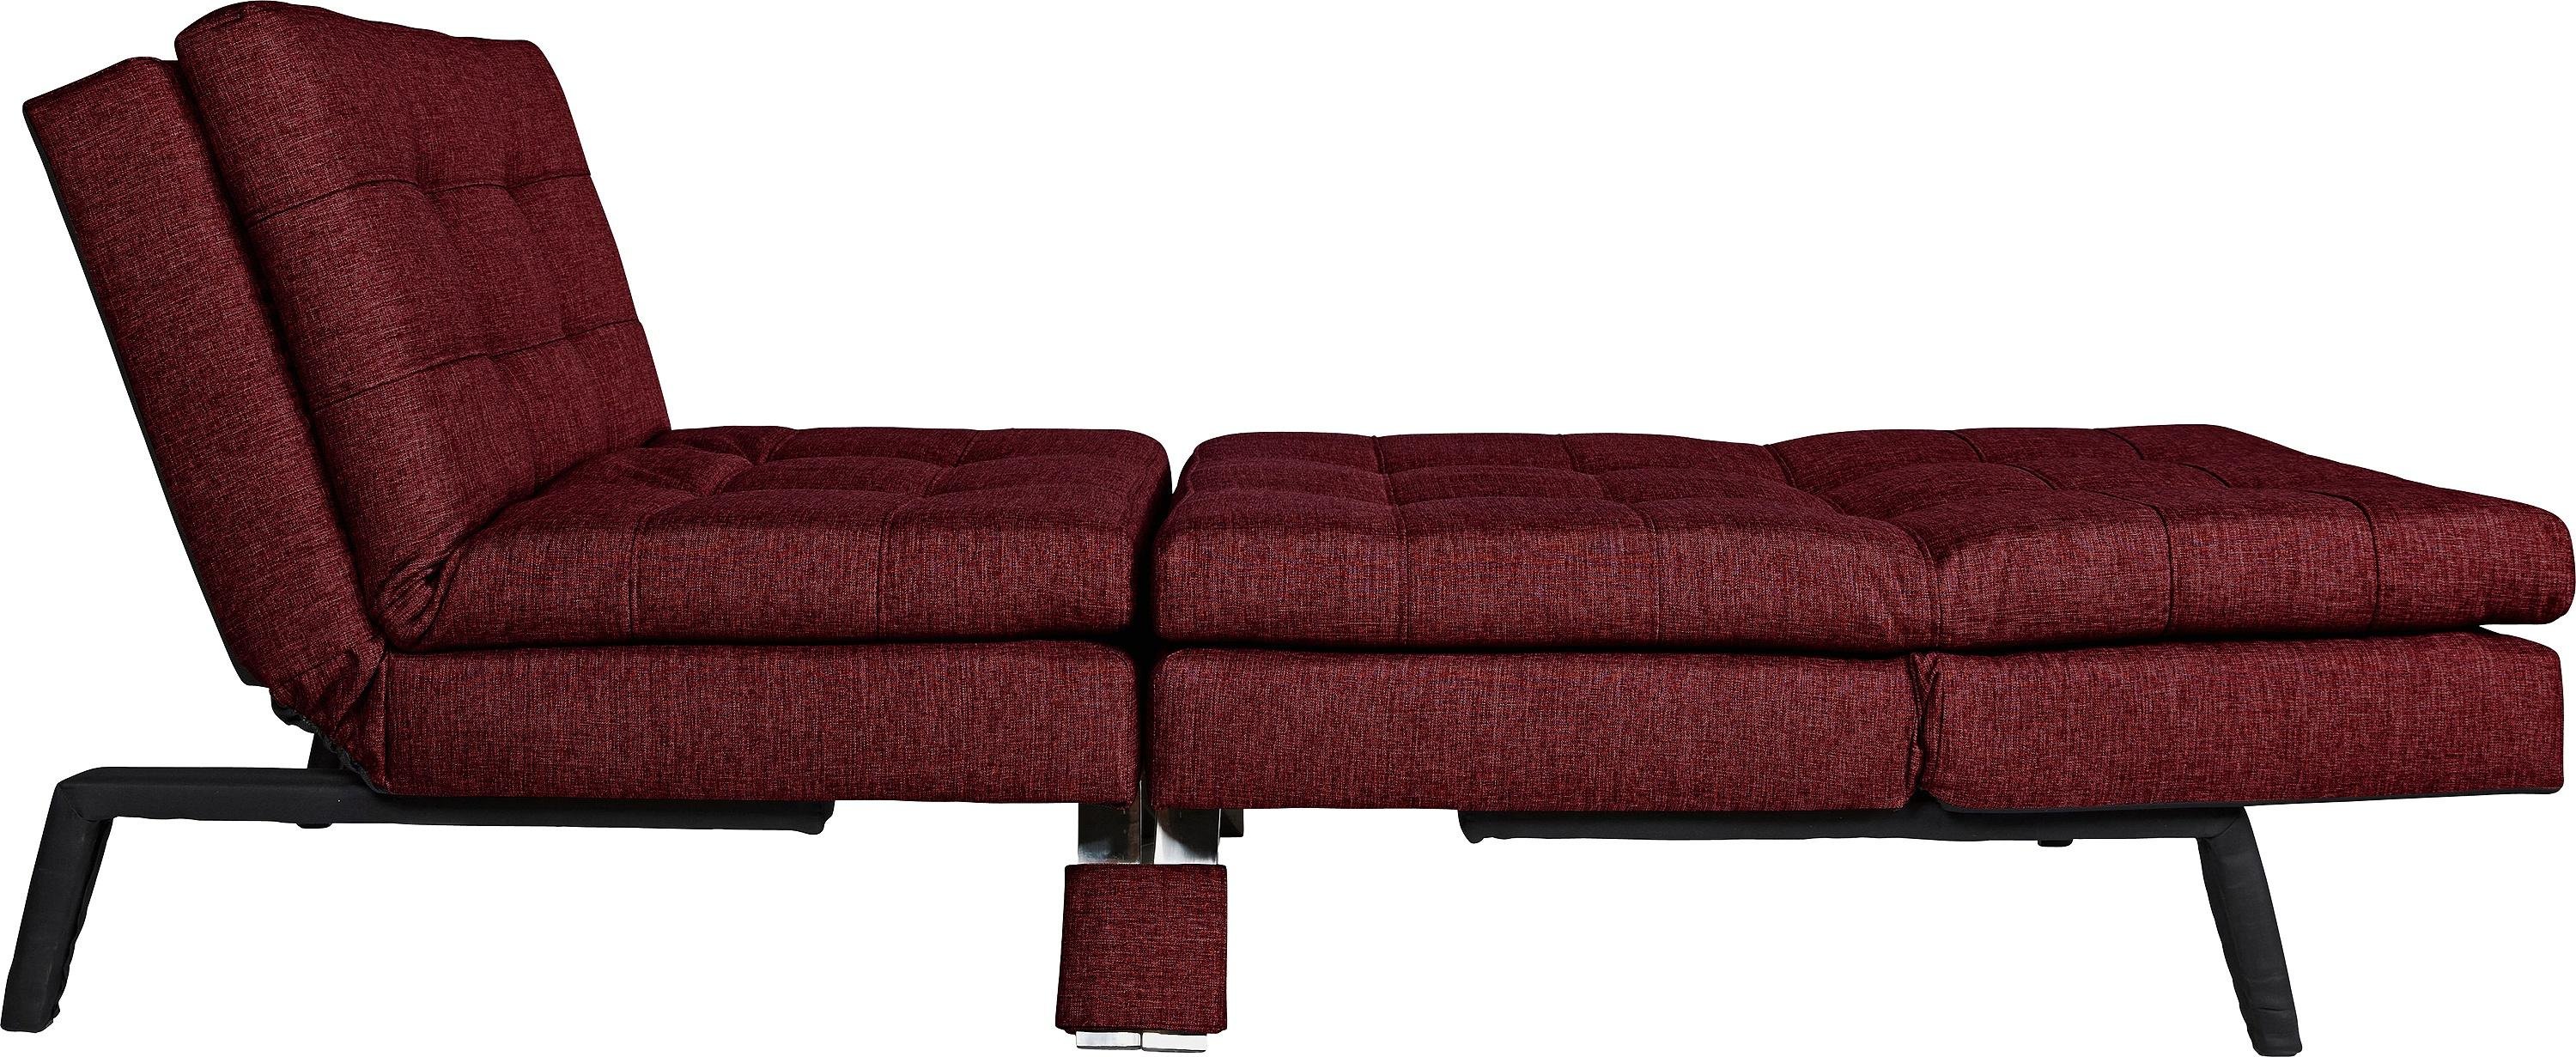 duo fabric clic clac sofa bed